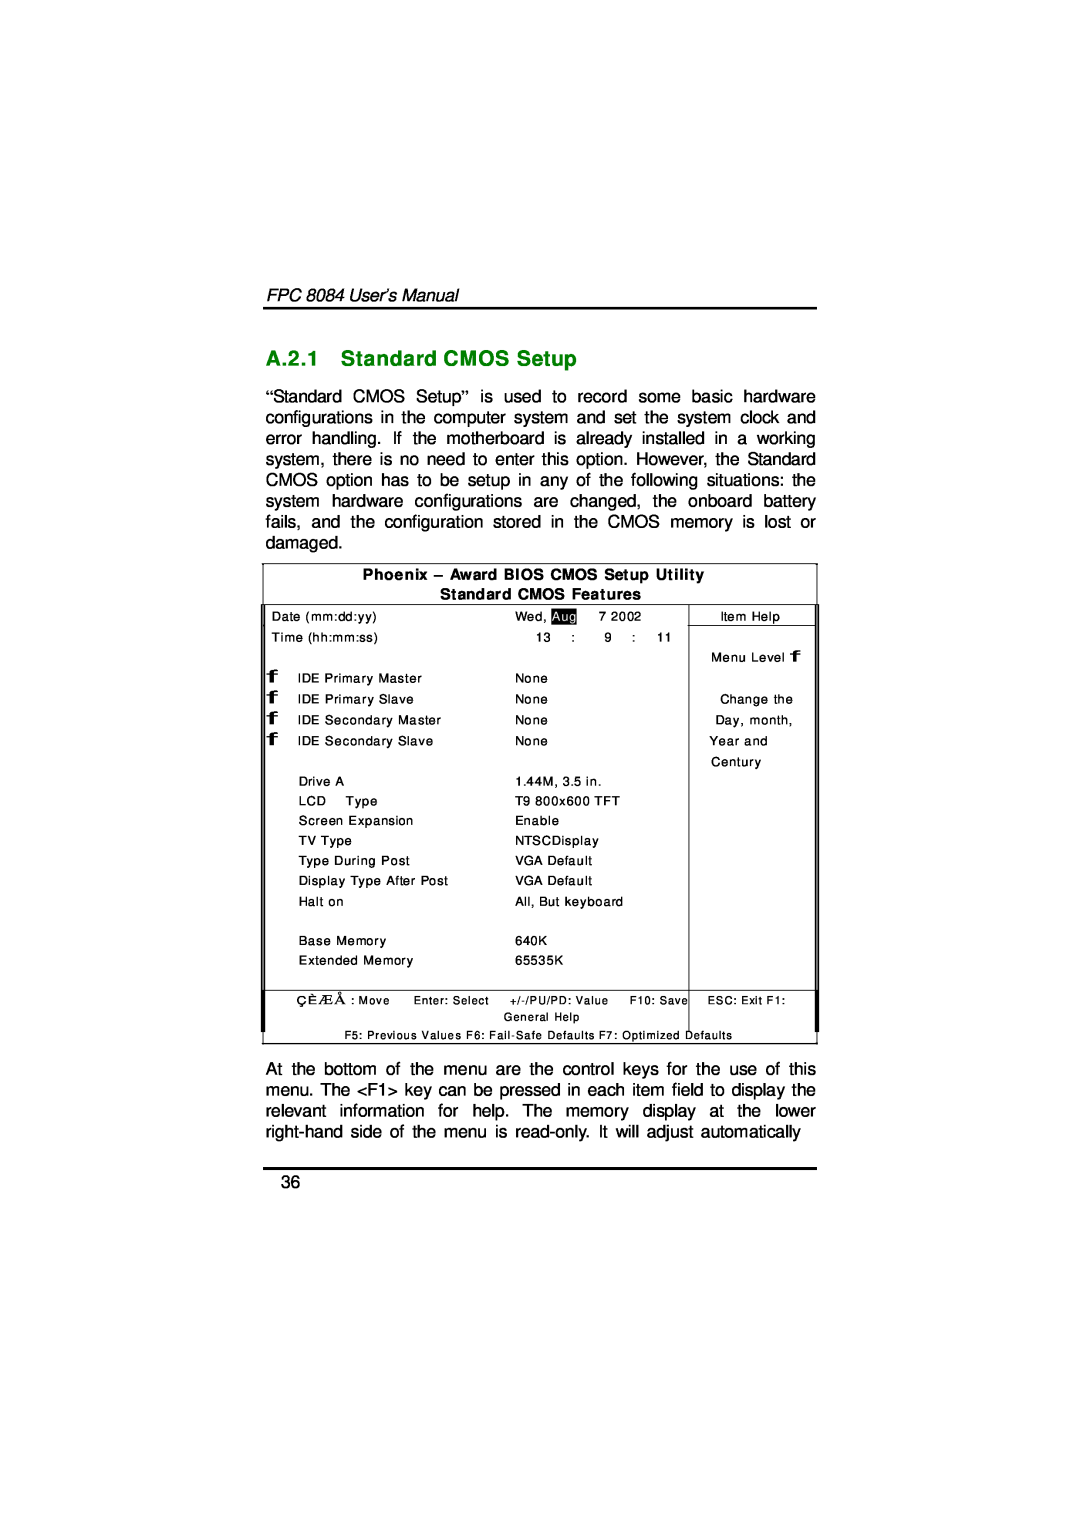 Acnodes user manual A.2.1 Standard CMOS Setup, FPC 8084 User’s Manual 